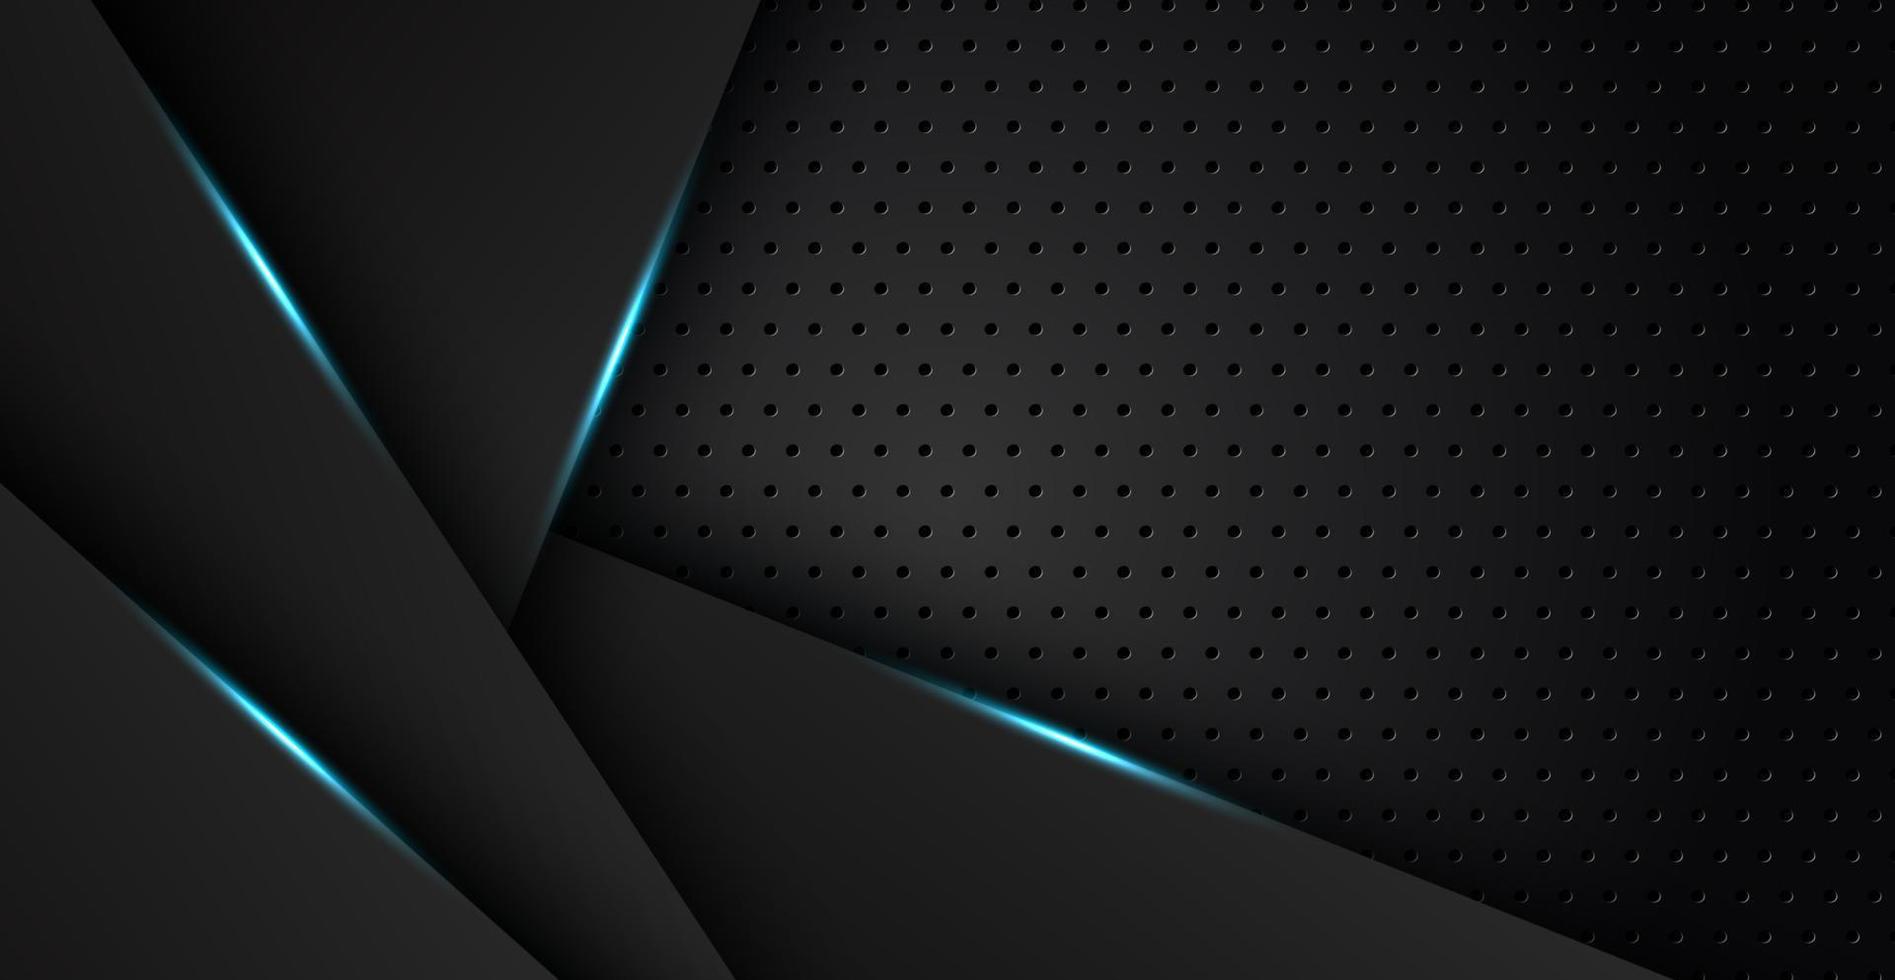 abstracte lichtblauw zwarte ruimte frame lay-out ontwerp tech driehoek concept grijze textuur achtergrond. eps10 vector